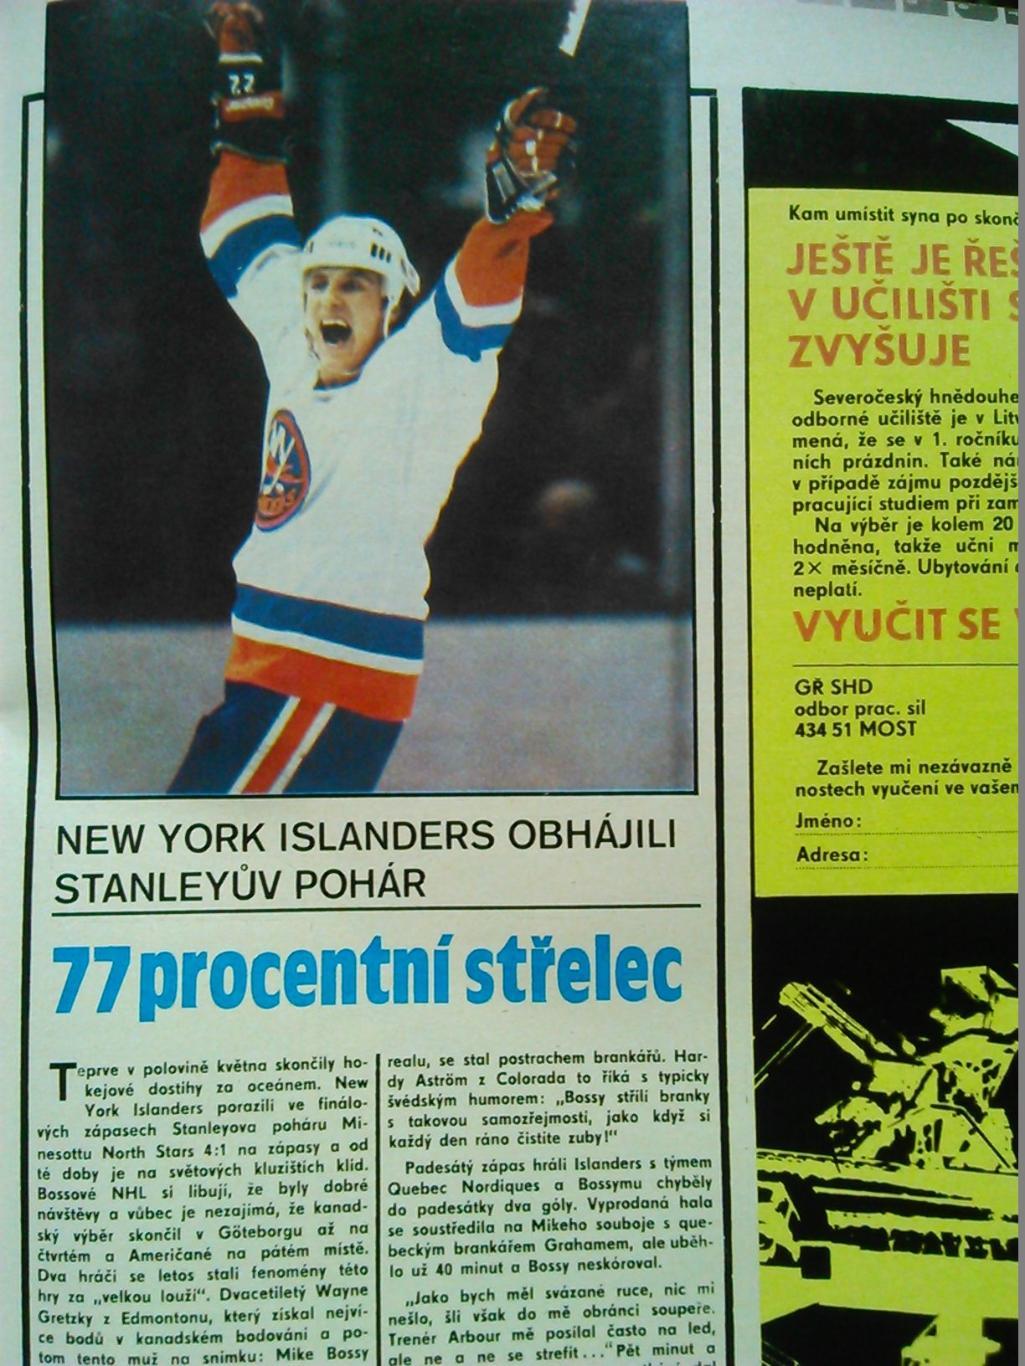 Stadion (Стадион).№ 25.1981.Футбол,хоккей-НХЛ, Гимнастика. Оптом скидки до 50%! 4